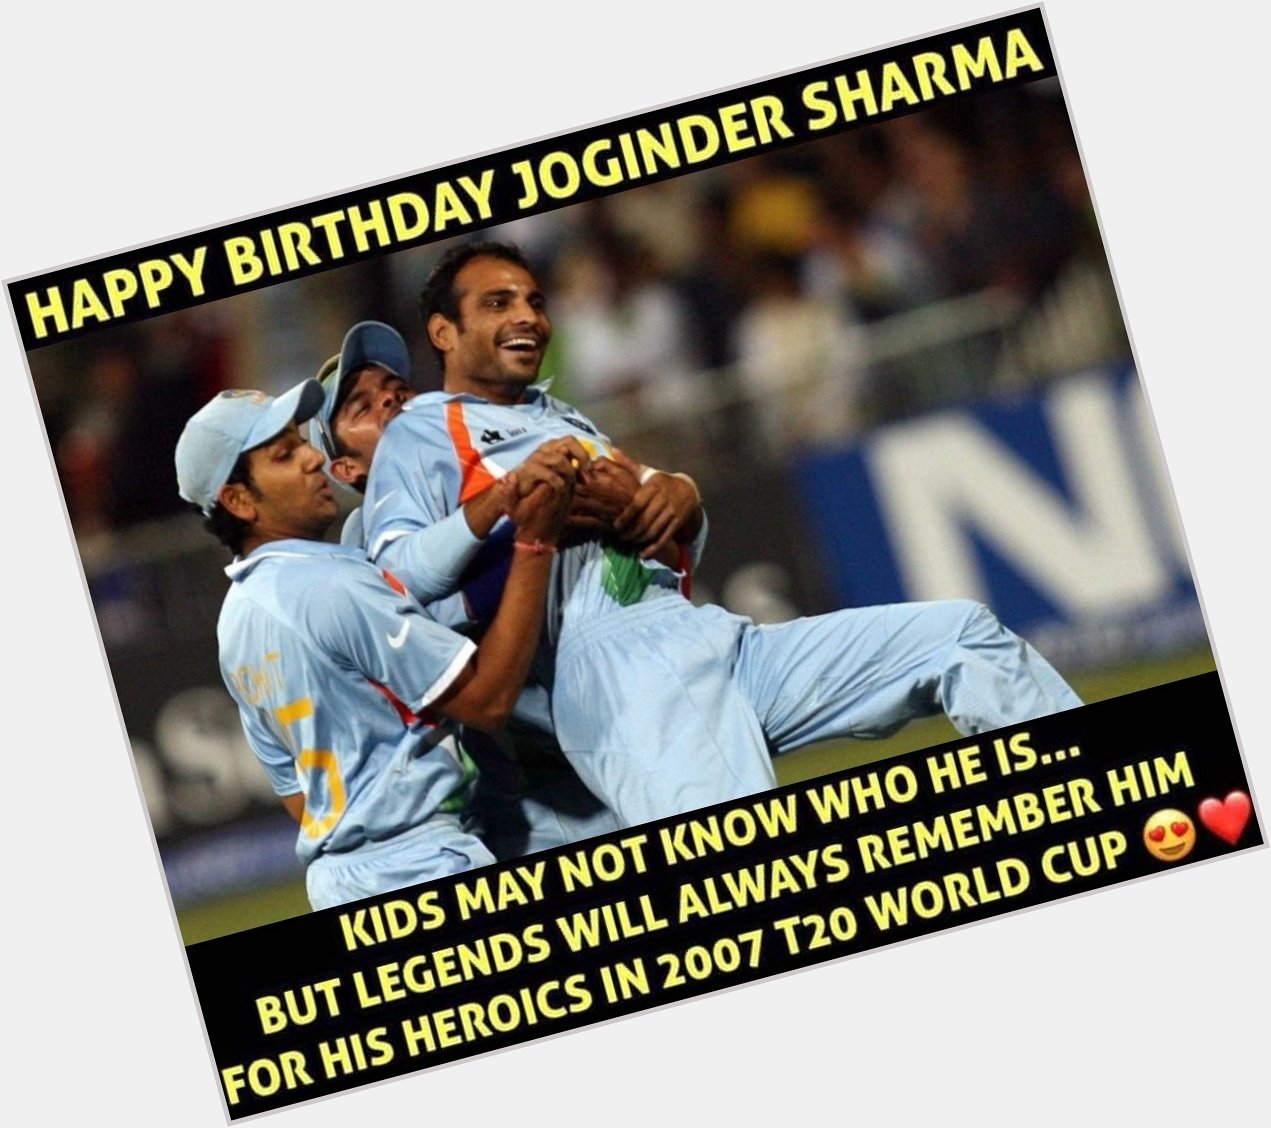 Happy Birthday Joginder Sharma! 